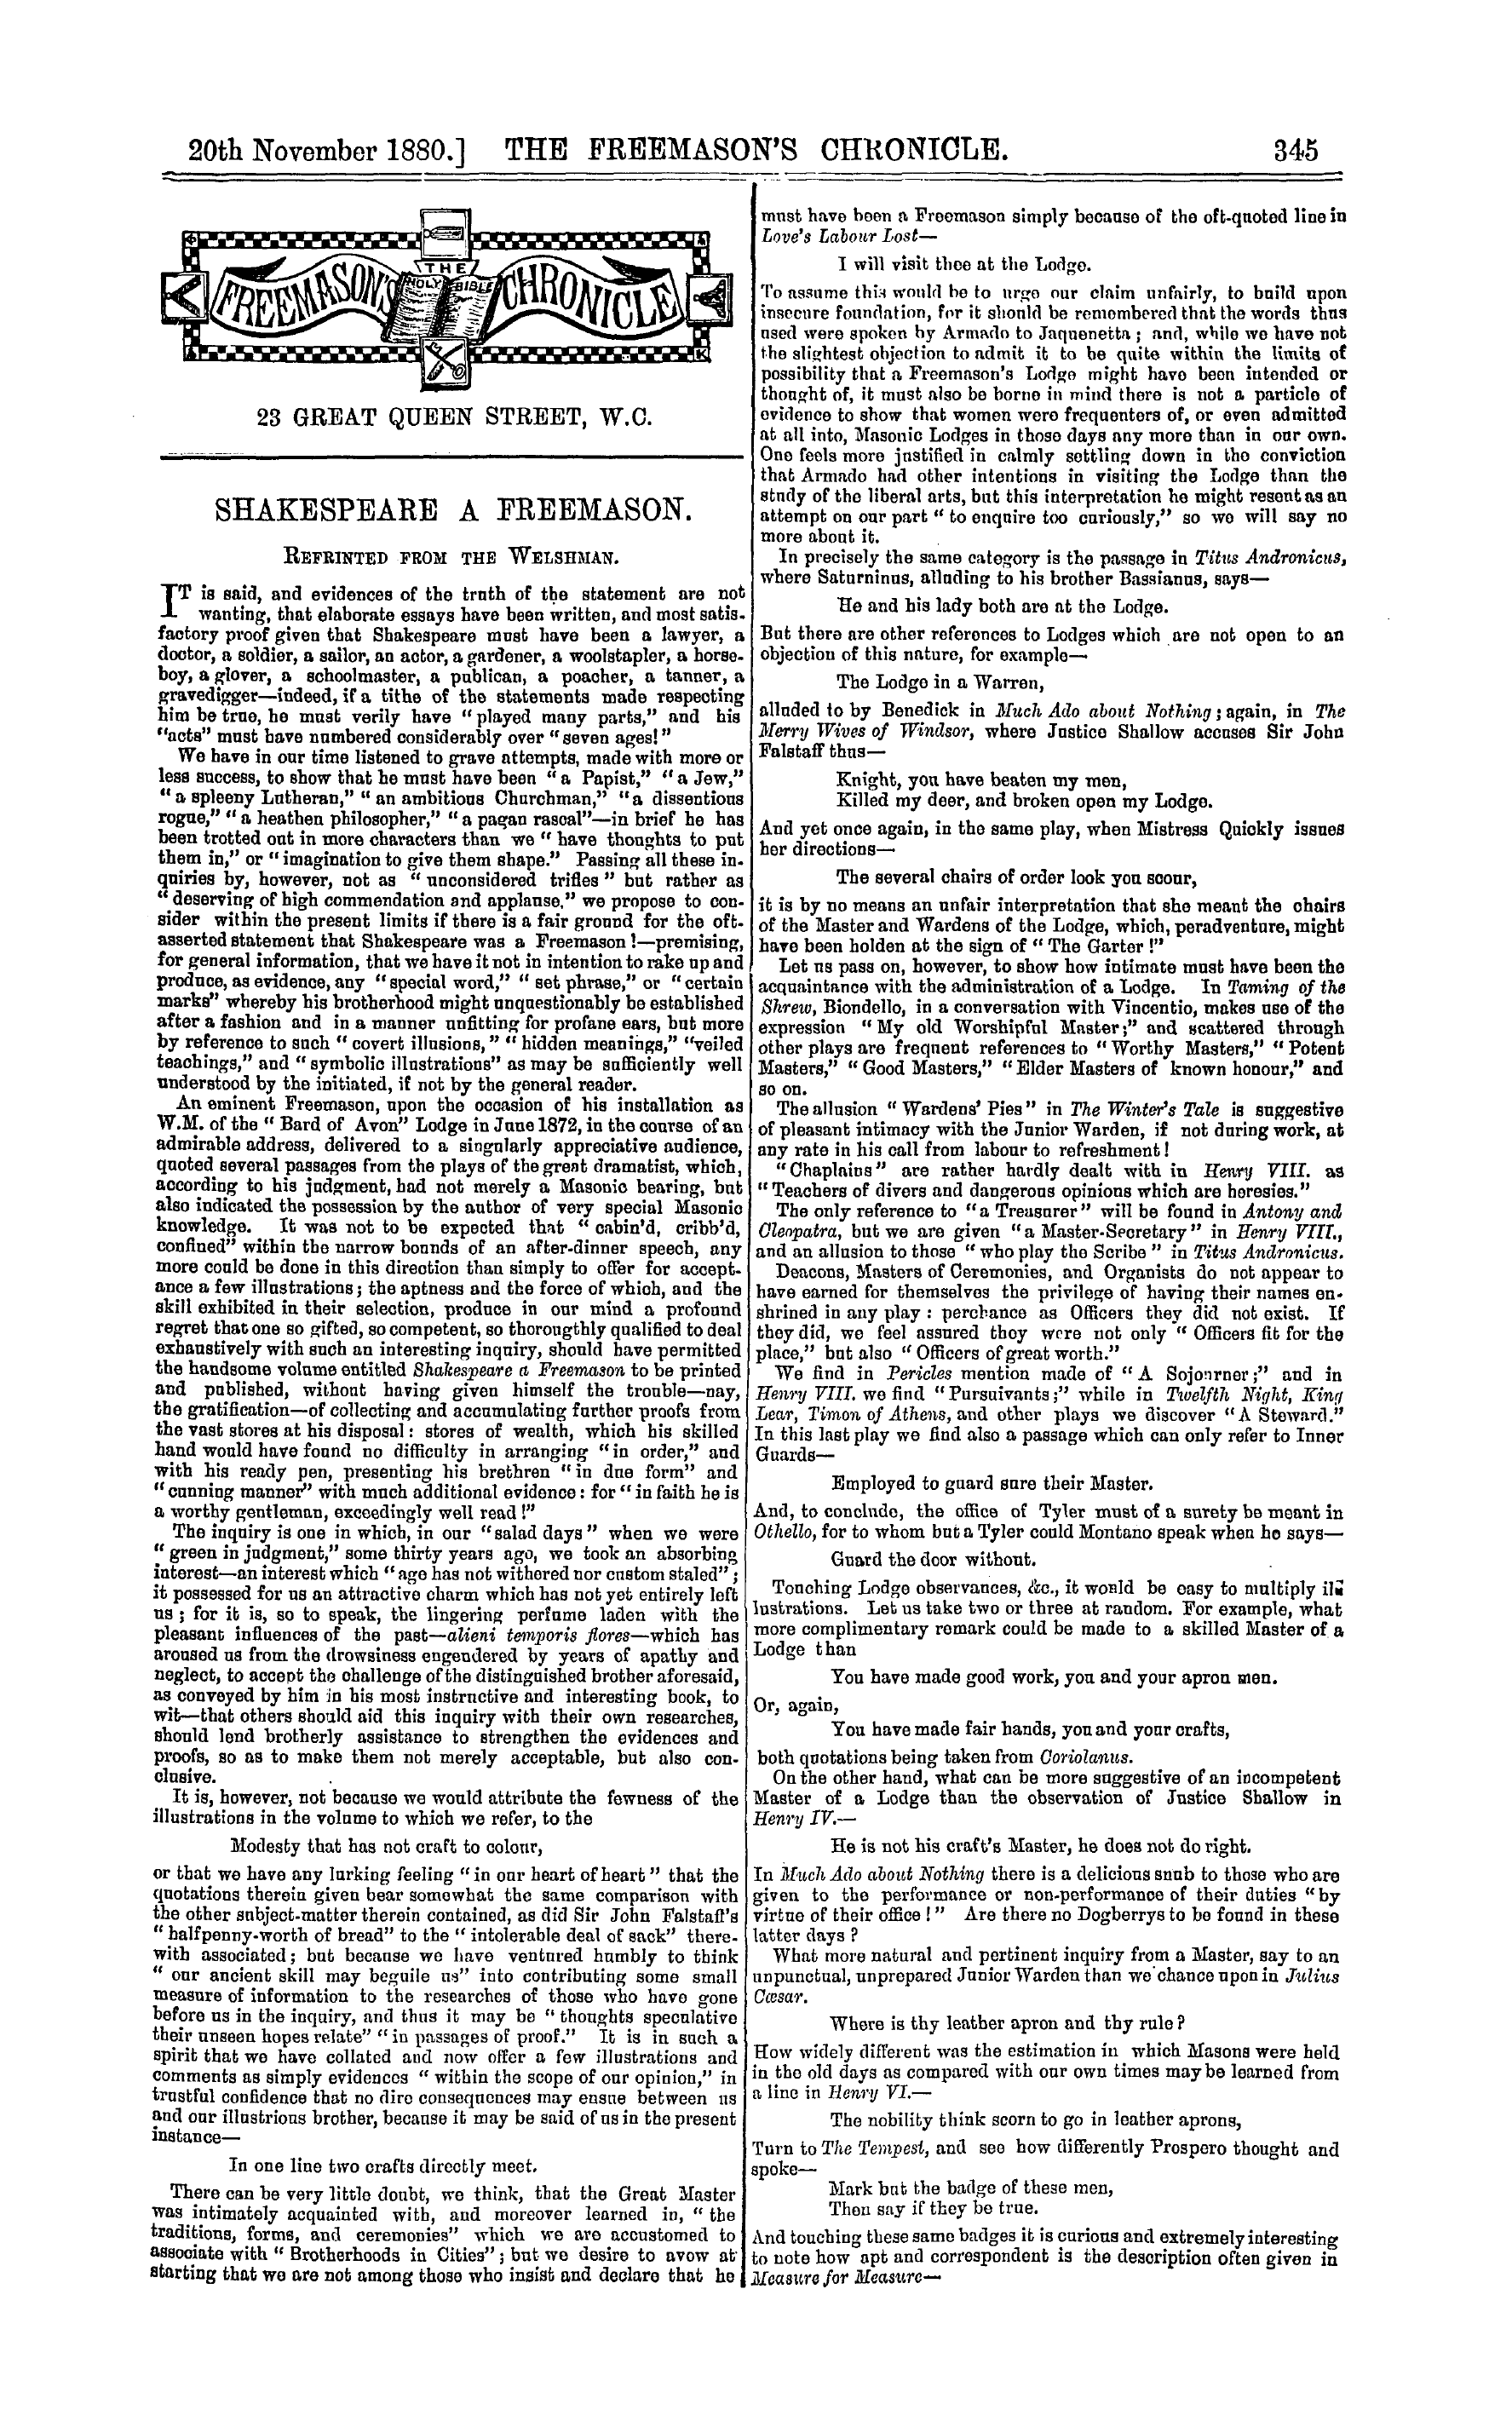 The Freemason's Chronicle: 1880-11-20 - Shakespeare A Freemason.